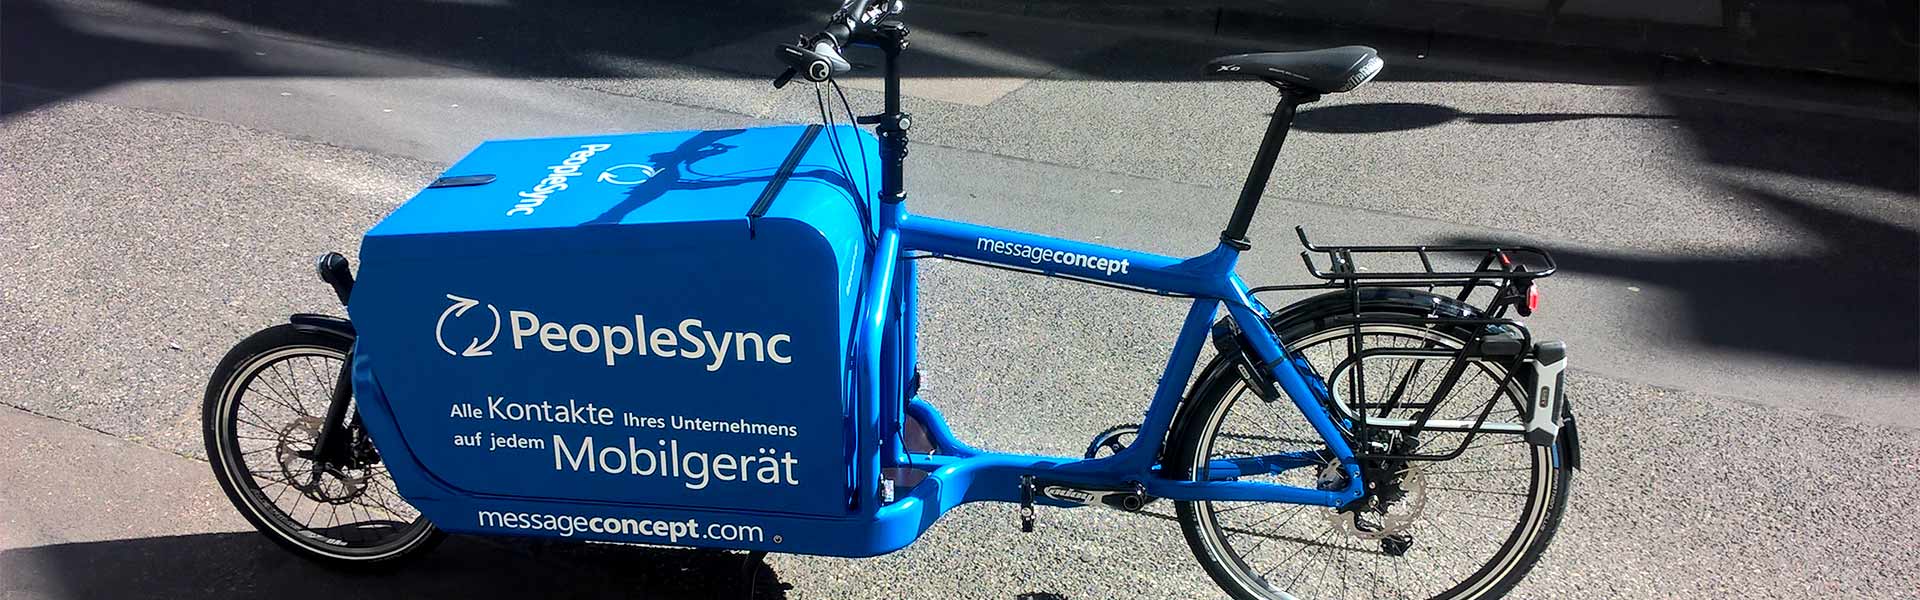 messageconcept cargo bike